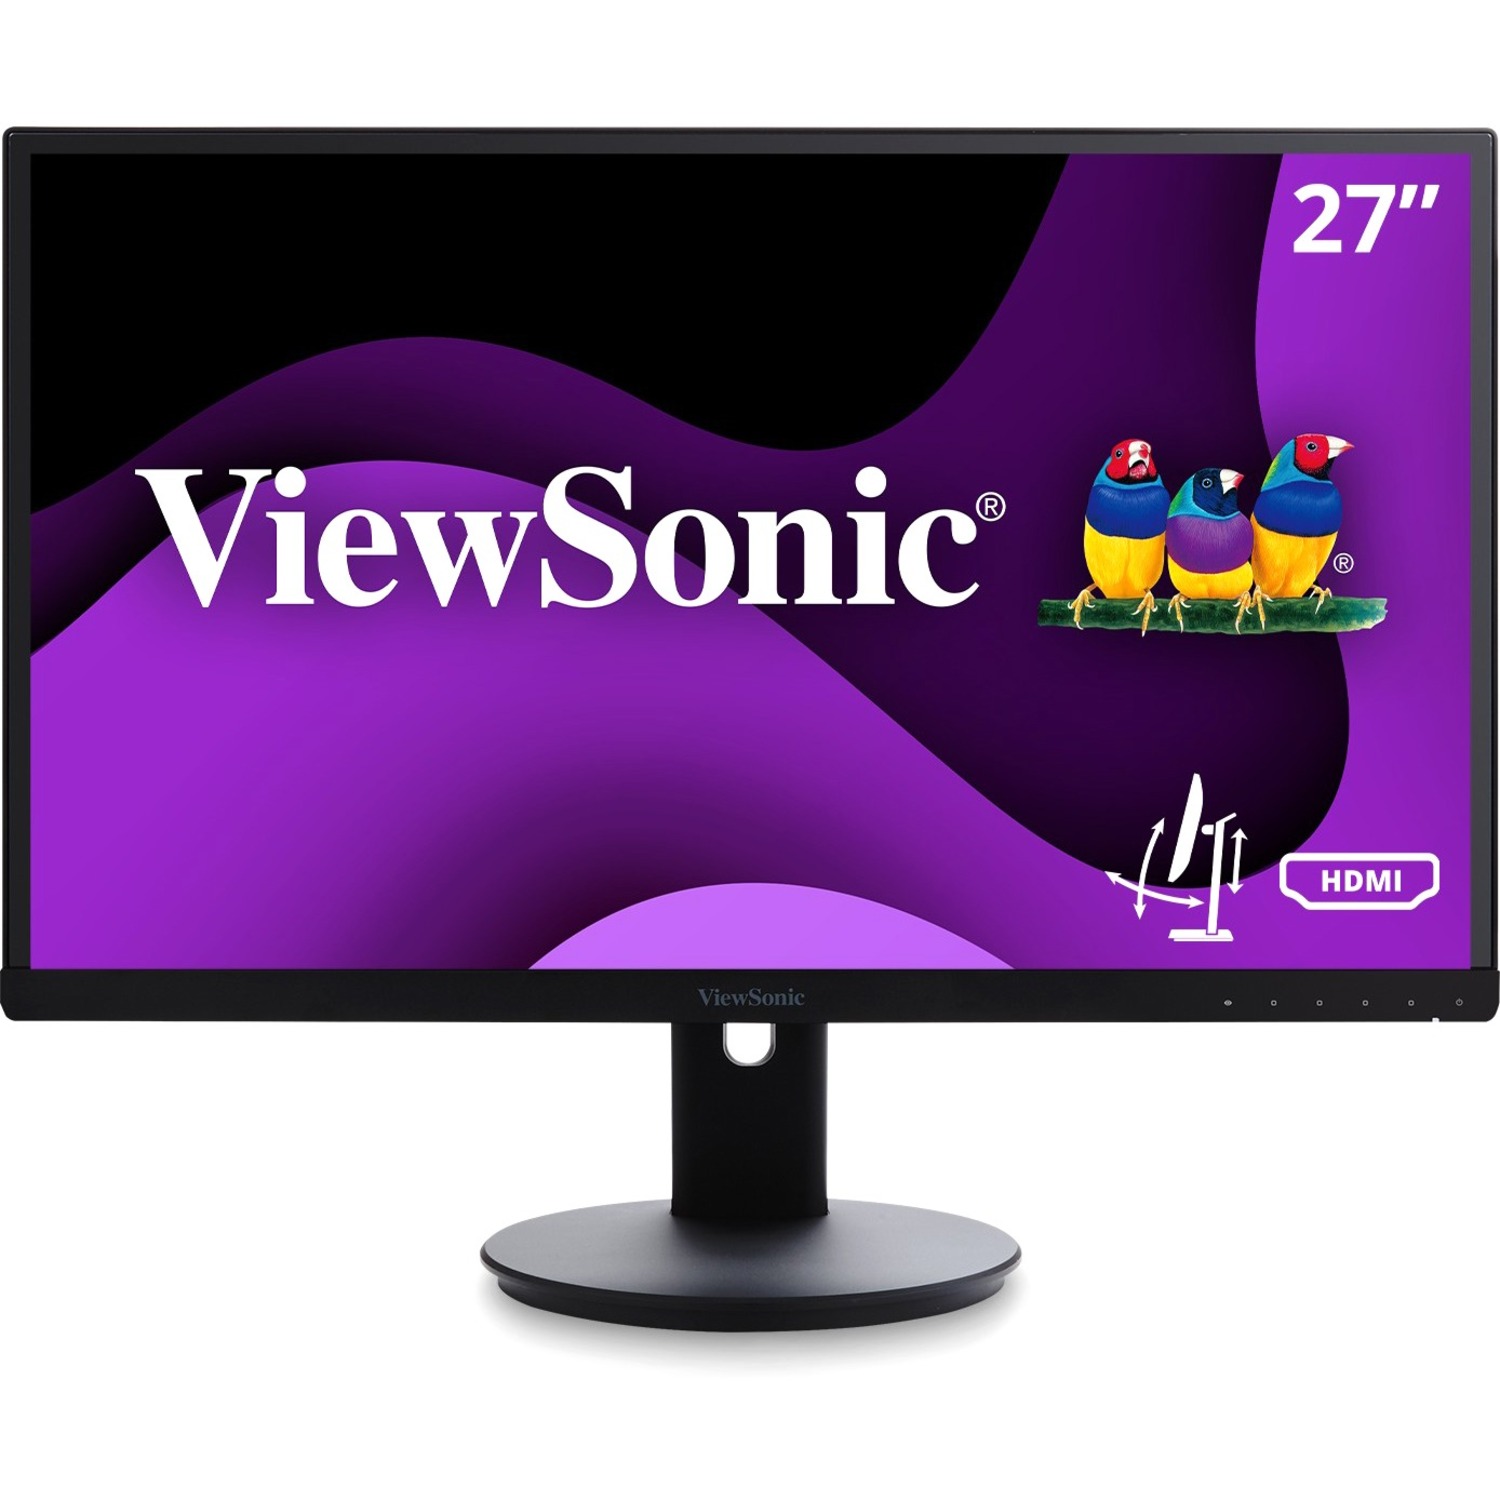 Viewsonic VG2753 27" Full HD LED LCD Monitor - 16:9 - Black_subImage_1